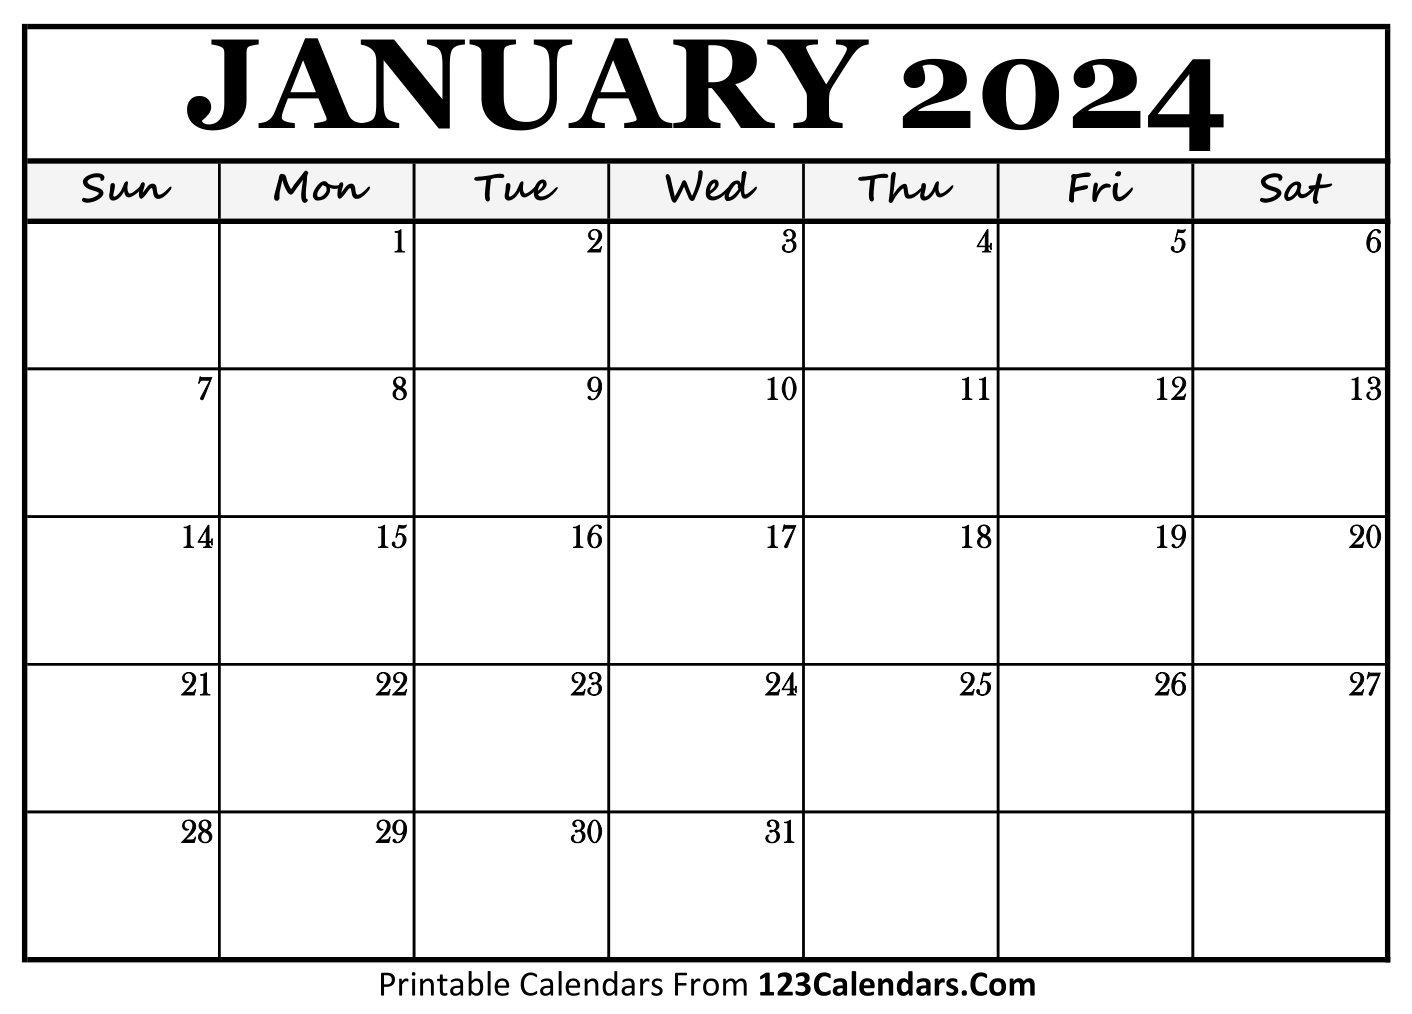 Printable January 2024 Calendar Templates - 123Calendars for January 2024 Printable Calendar Wiki